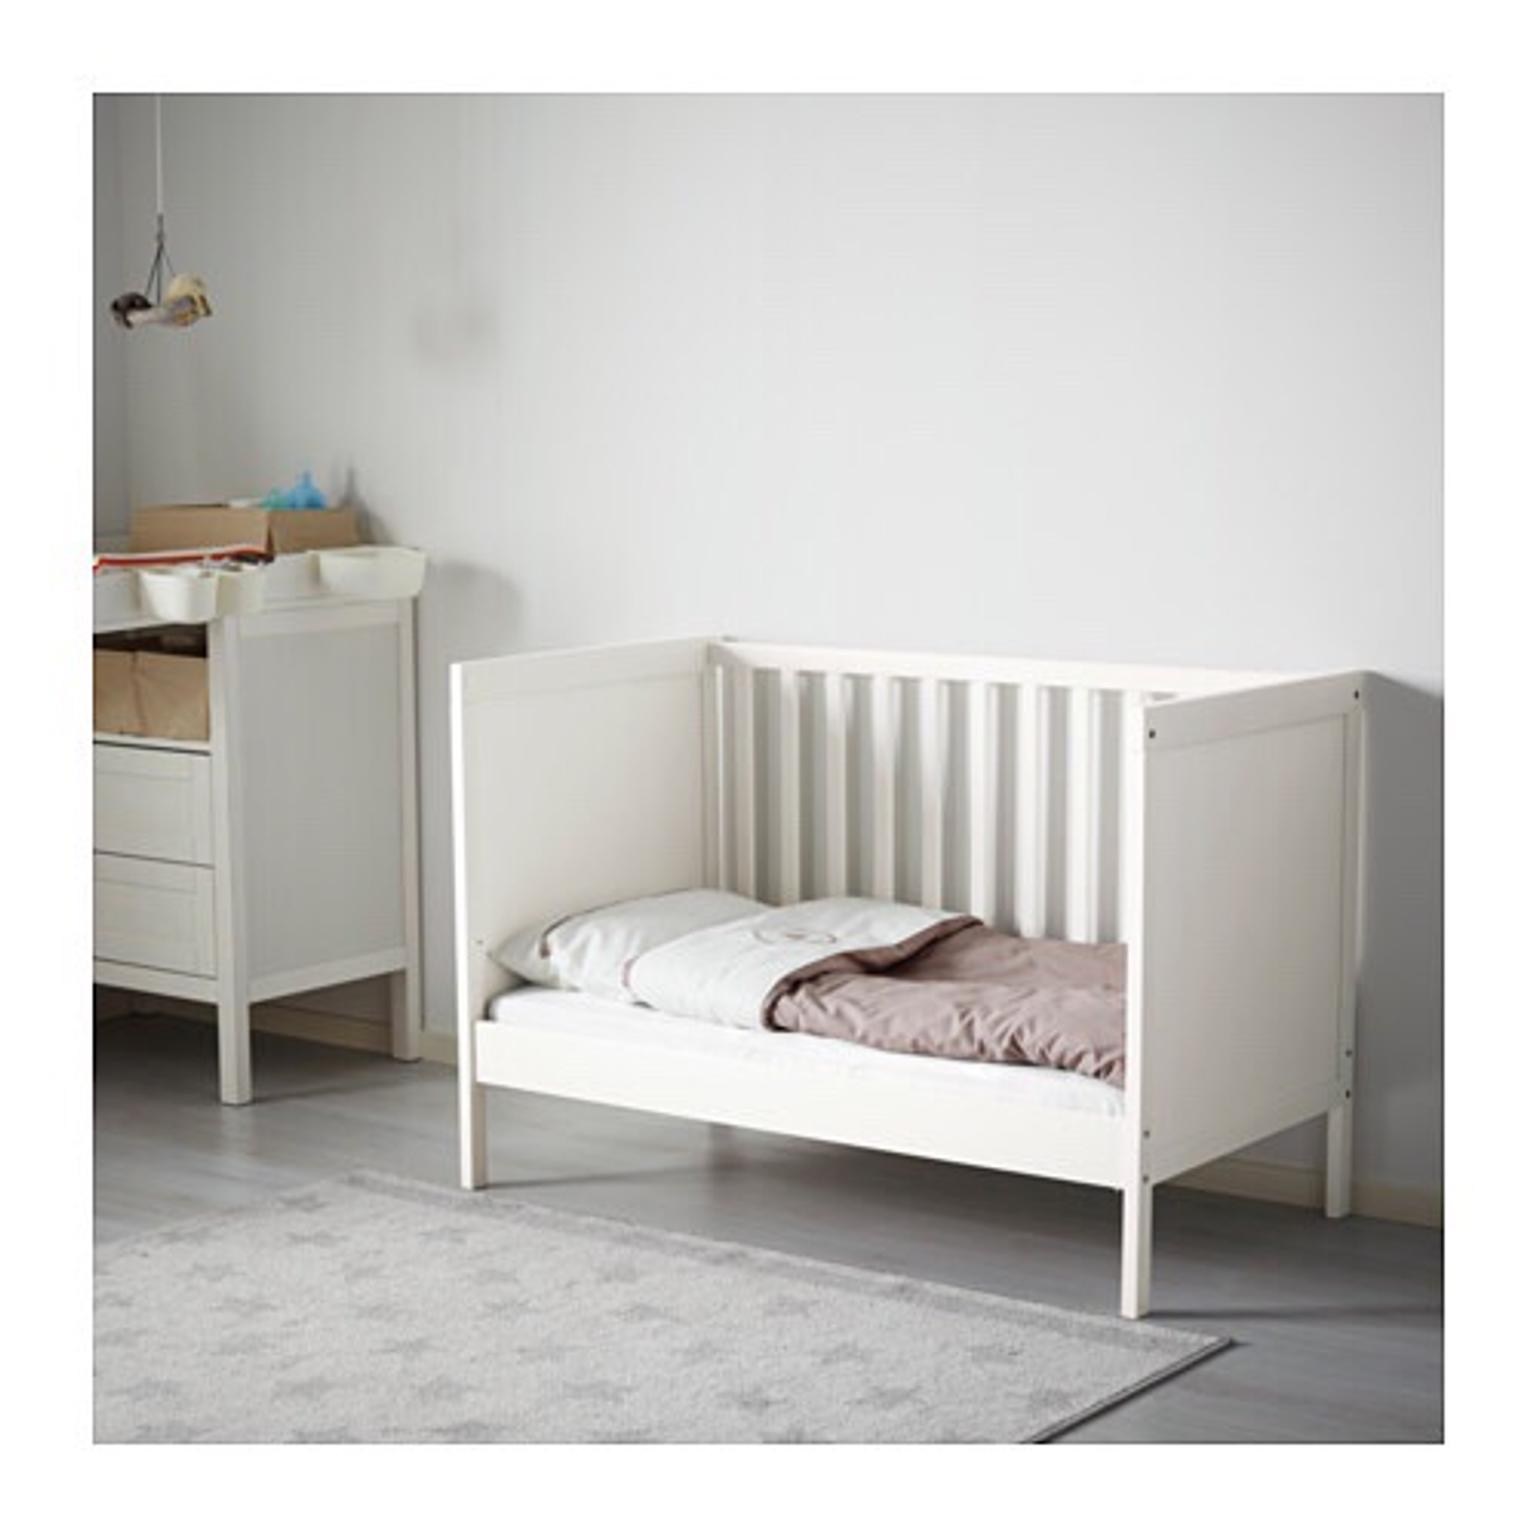 IKEA Babybett Kinderbett Gitterbett  mit Matratze weiß 60 x 120 cm 